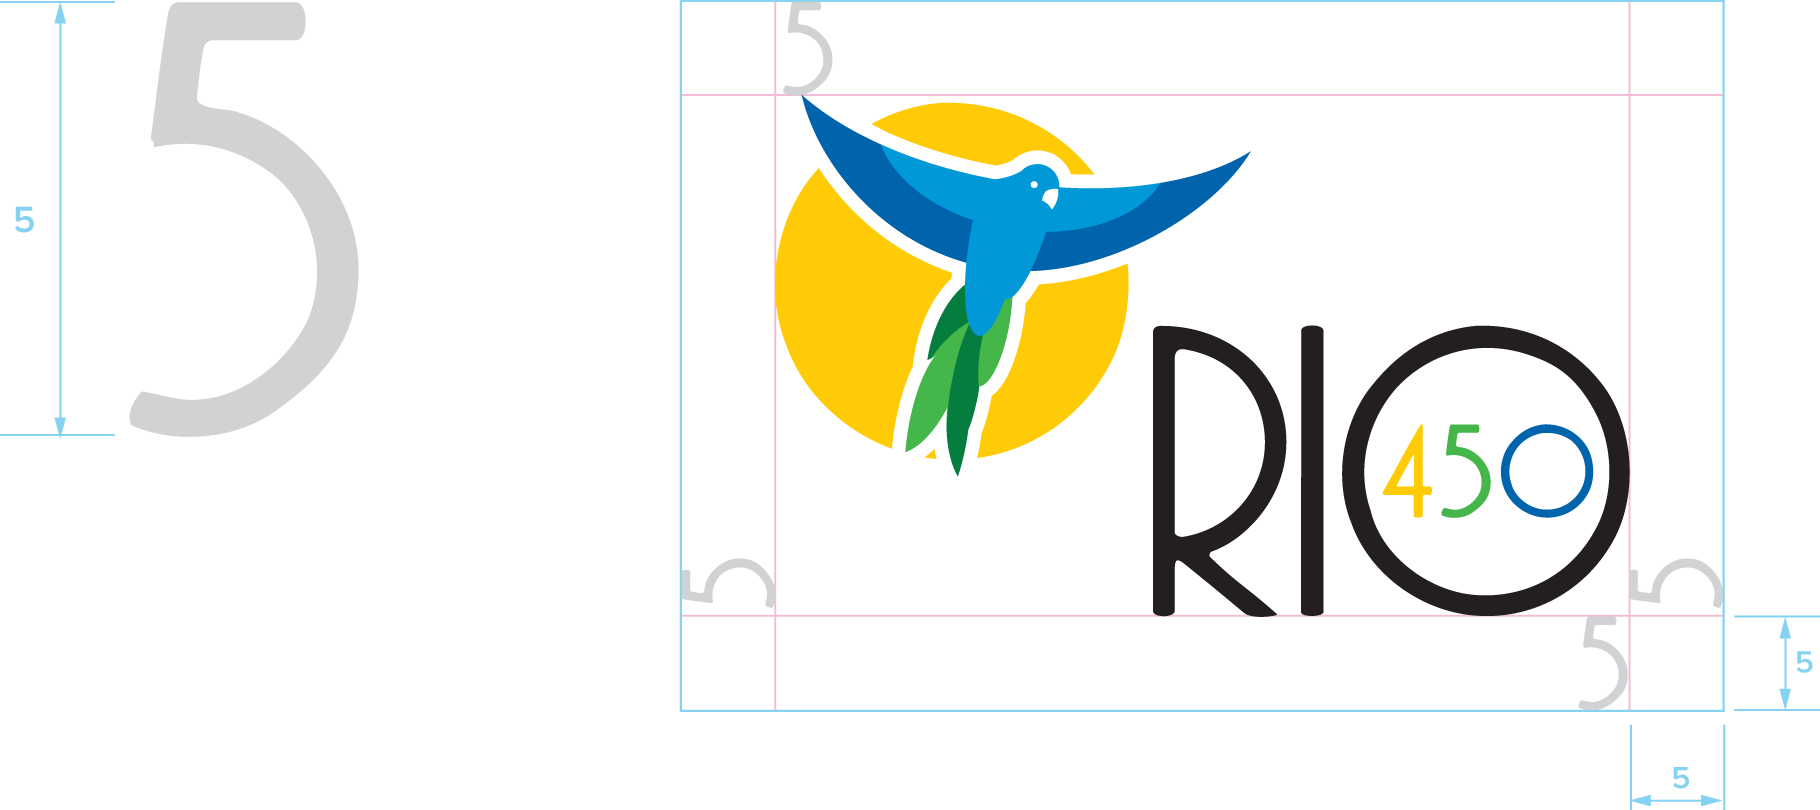 RIO 450 Logo Design Clear space